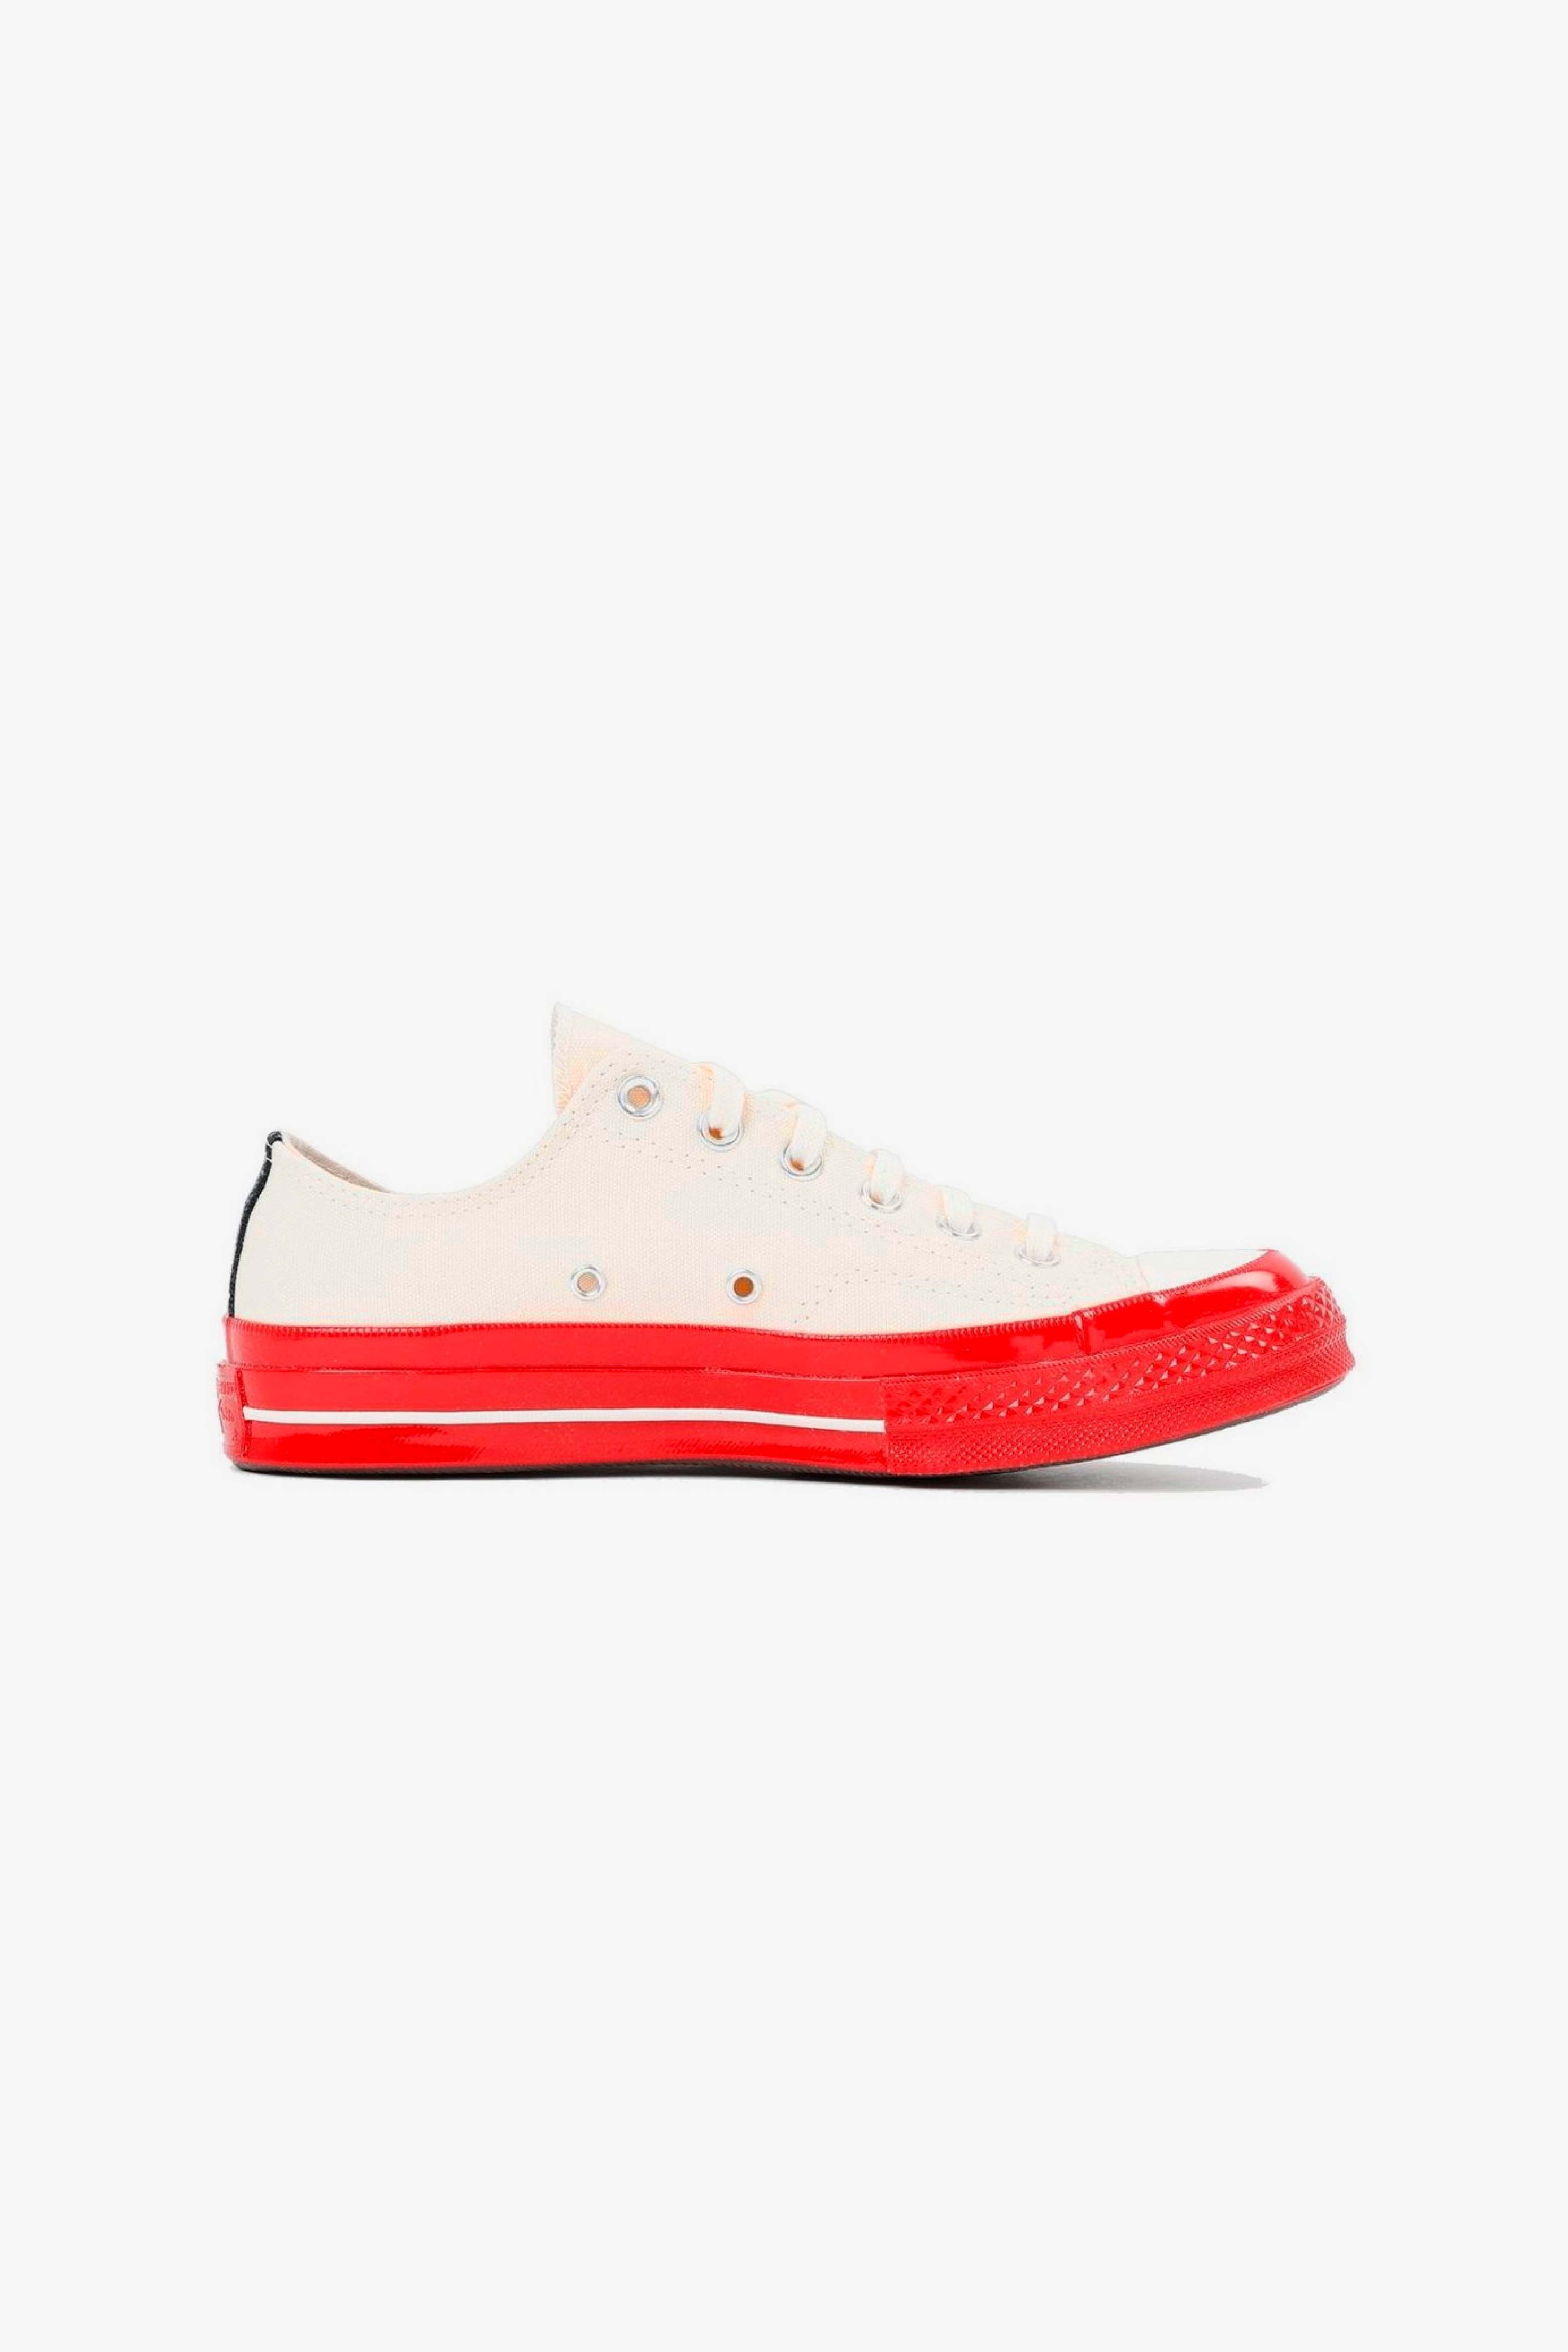 Selectshop FRAME - COMME DES GARCONS PLAY Converse Red Sole Chuck 70 Low Top Footwear Dubai